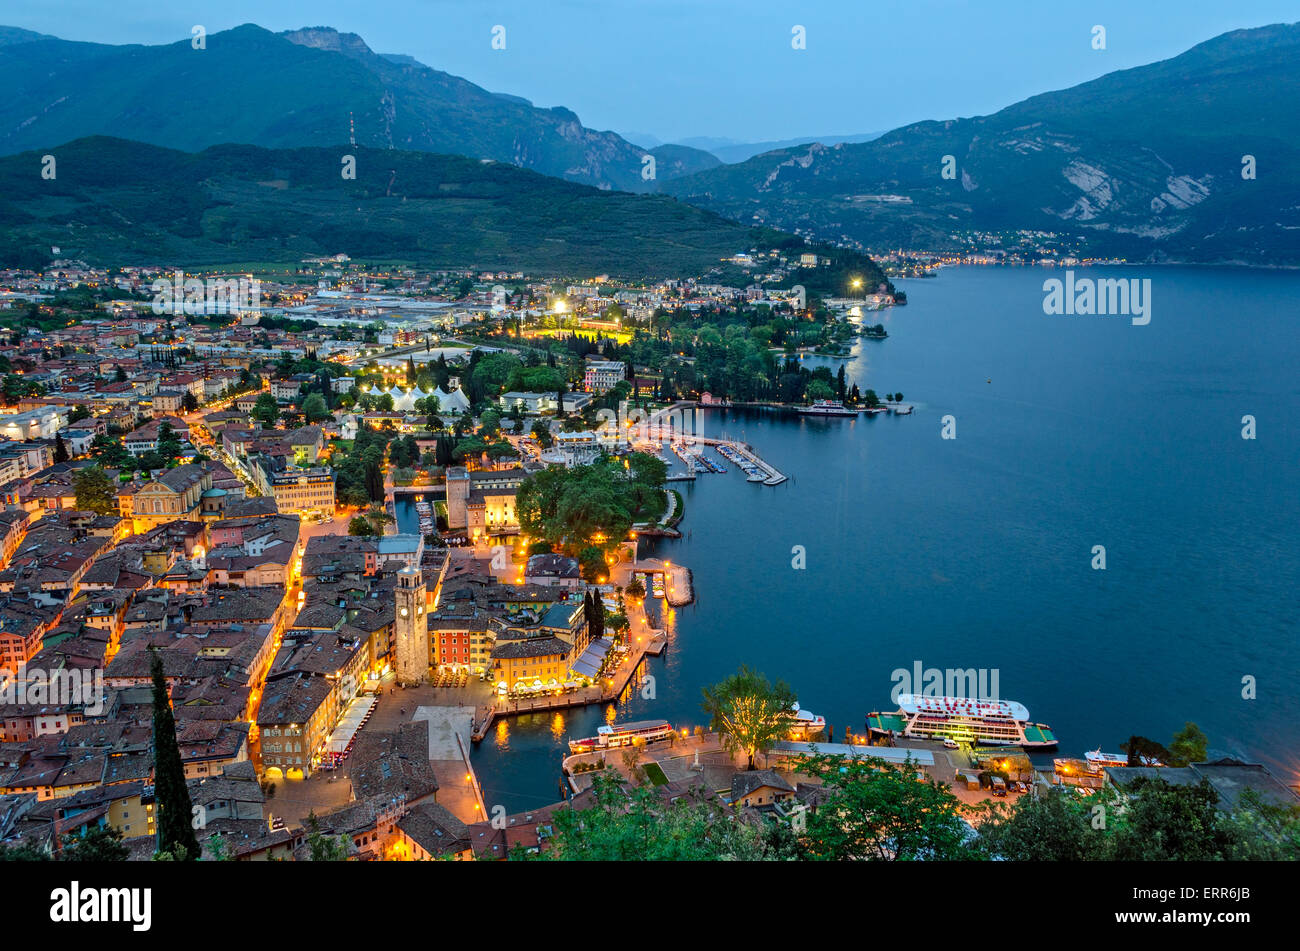 Le lac de Garde, la ville de Riva del Garda, Italie (blue hour) Banque D'Images